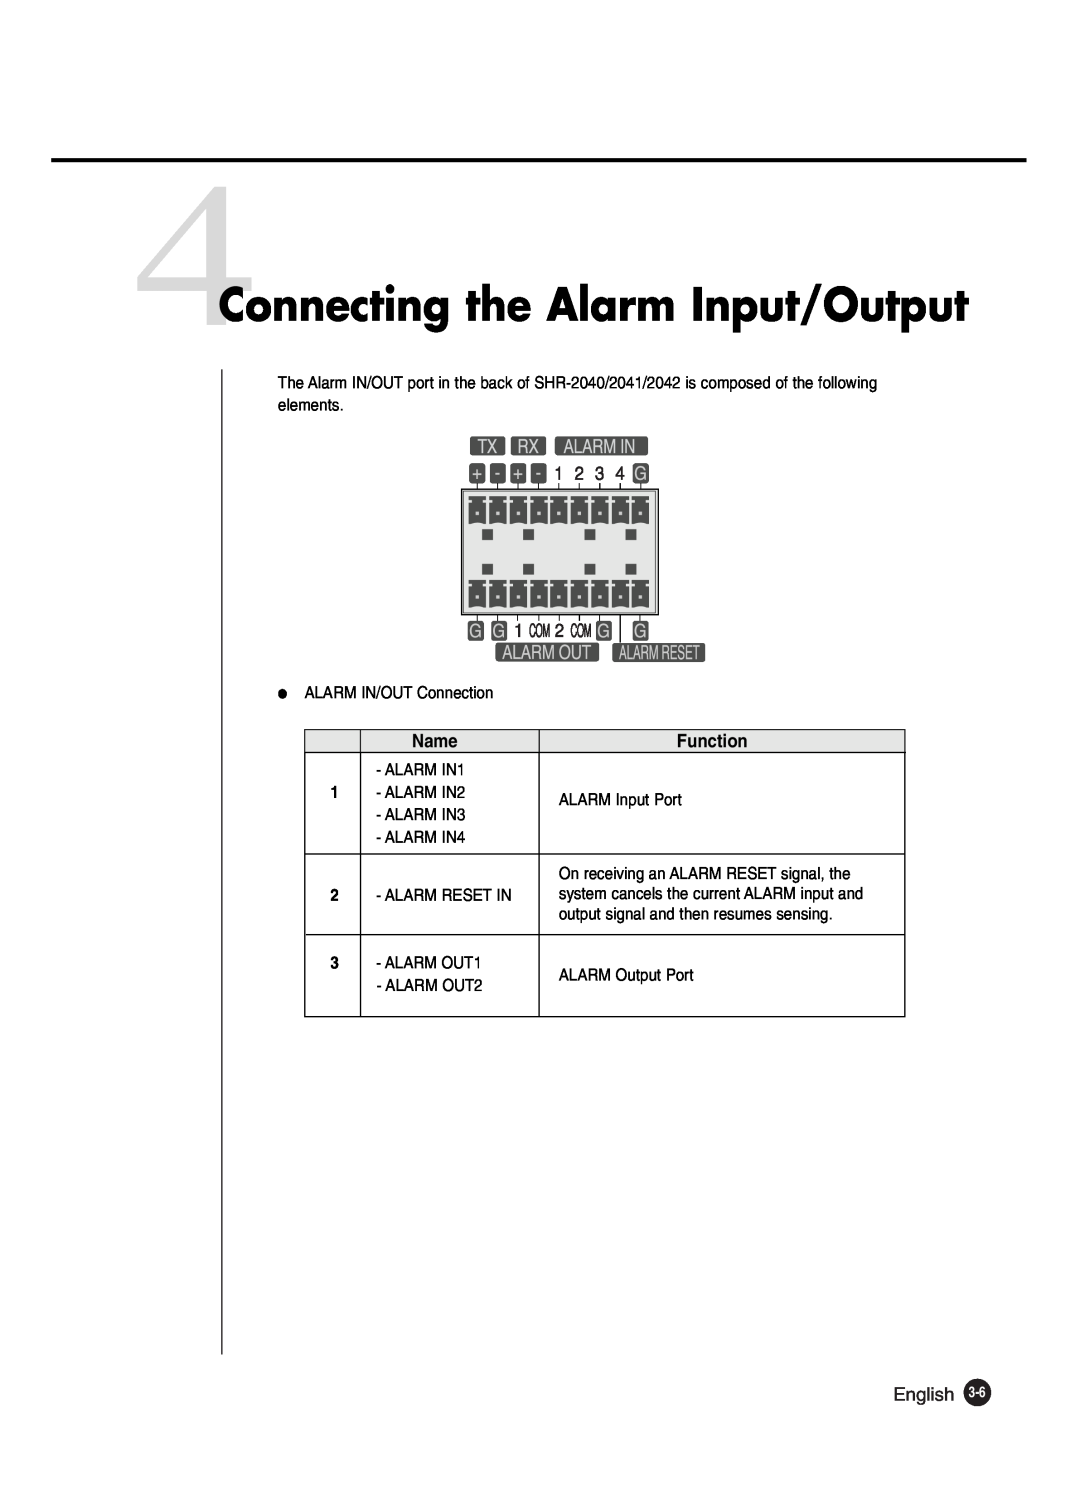 Samsung SHR-2042P250, SHR-2040P250 manual 4Connecting the Alarm Input/Output, Name, Function, English 